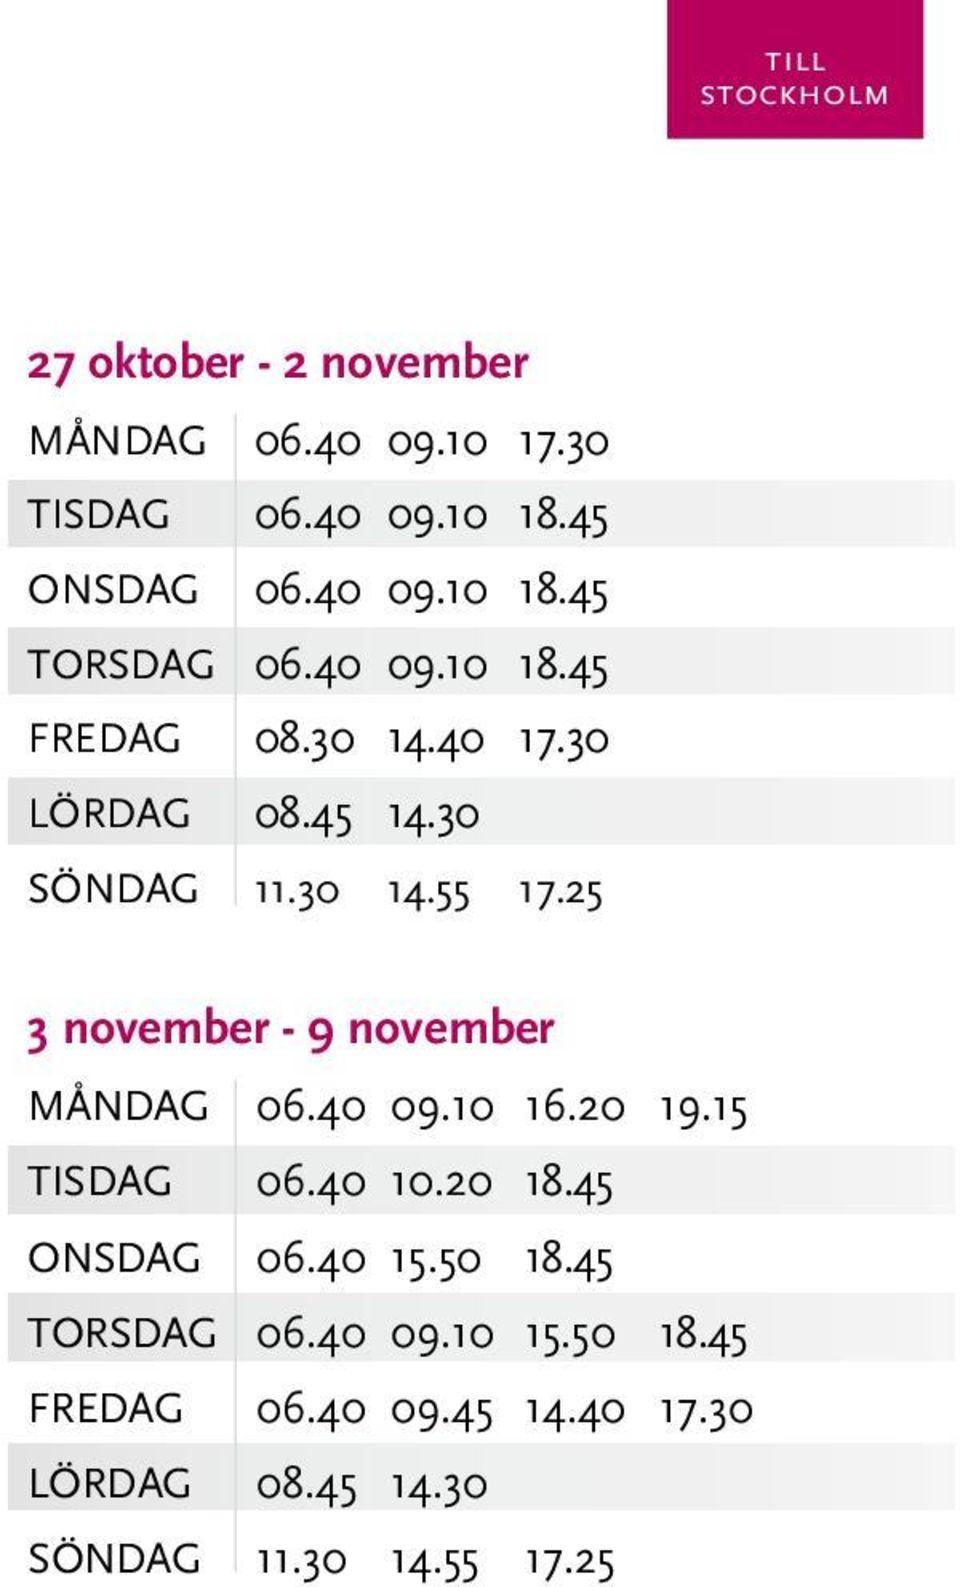 25 3 november - 9 november MånDAG TISDAG ONSDAG TORSDAG FREDAG LÖRDAG 06.40 09.10 16.20 19.15 06.40 10.